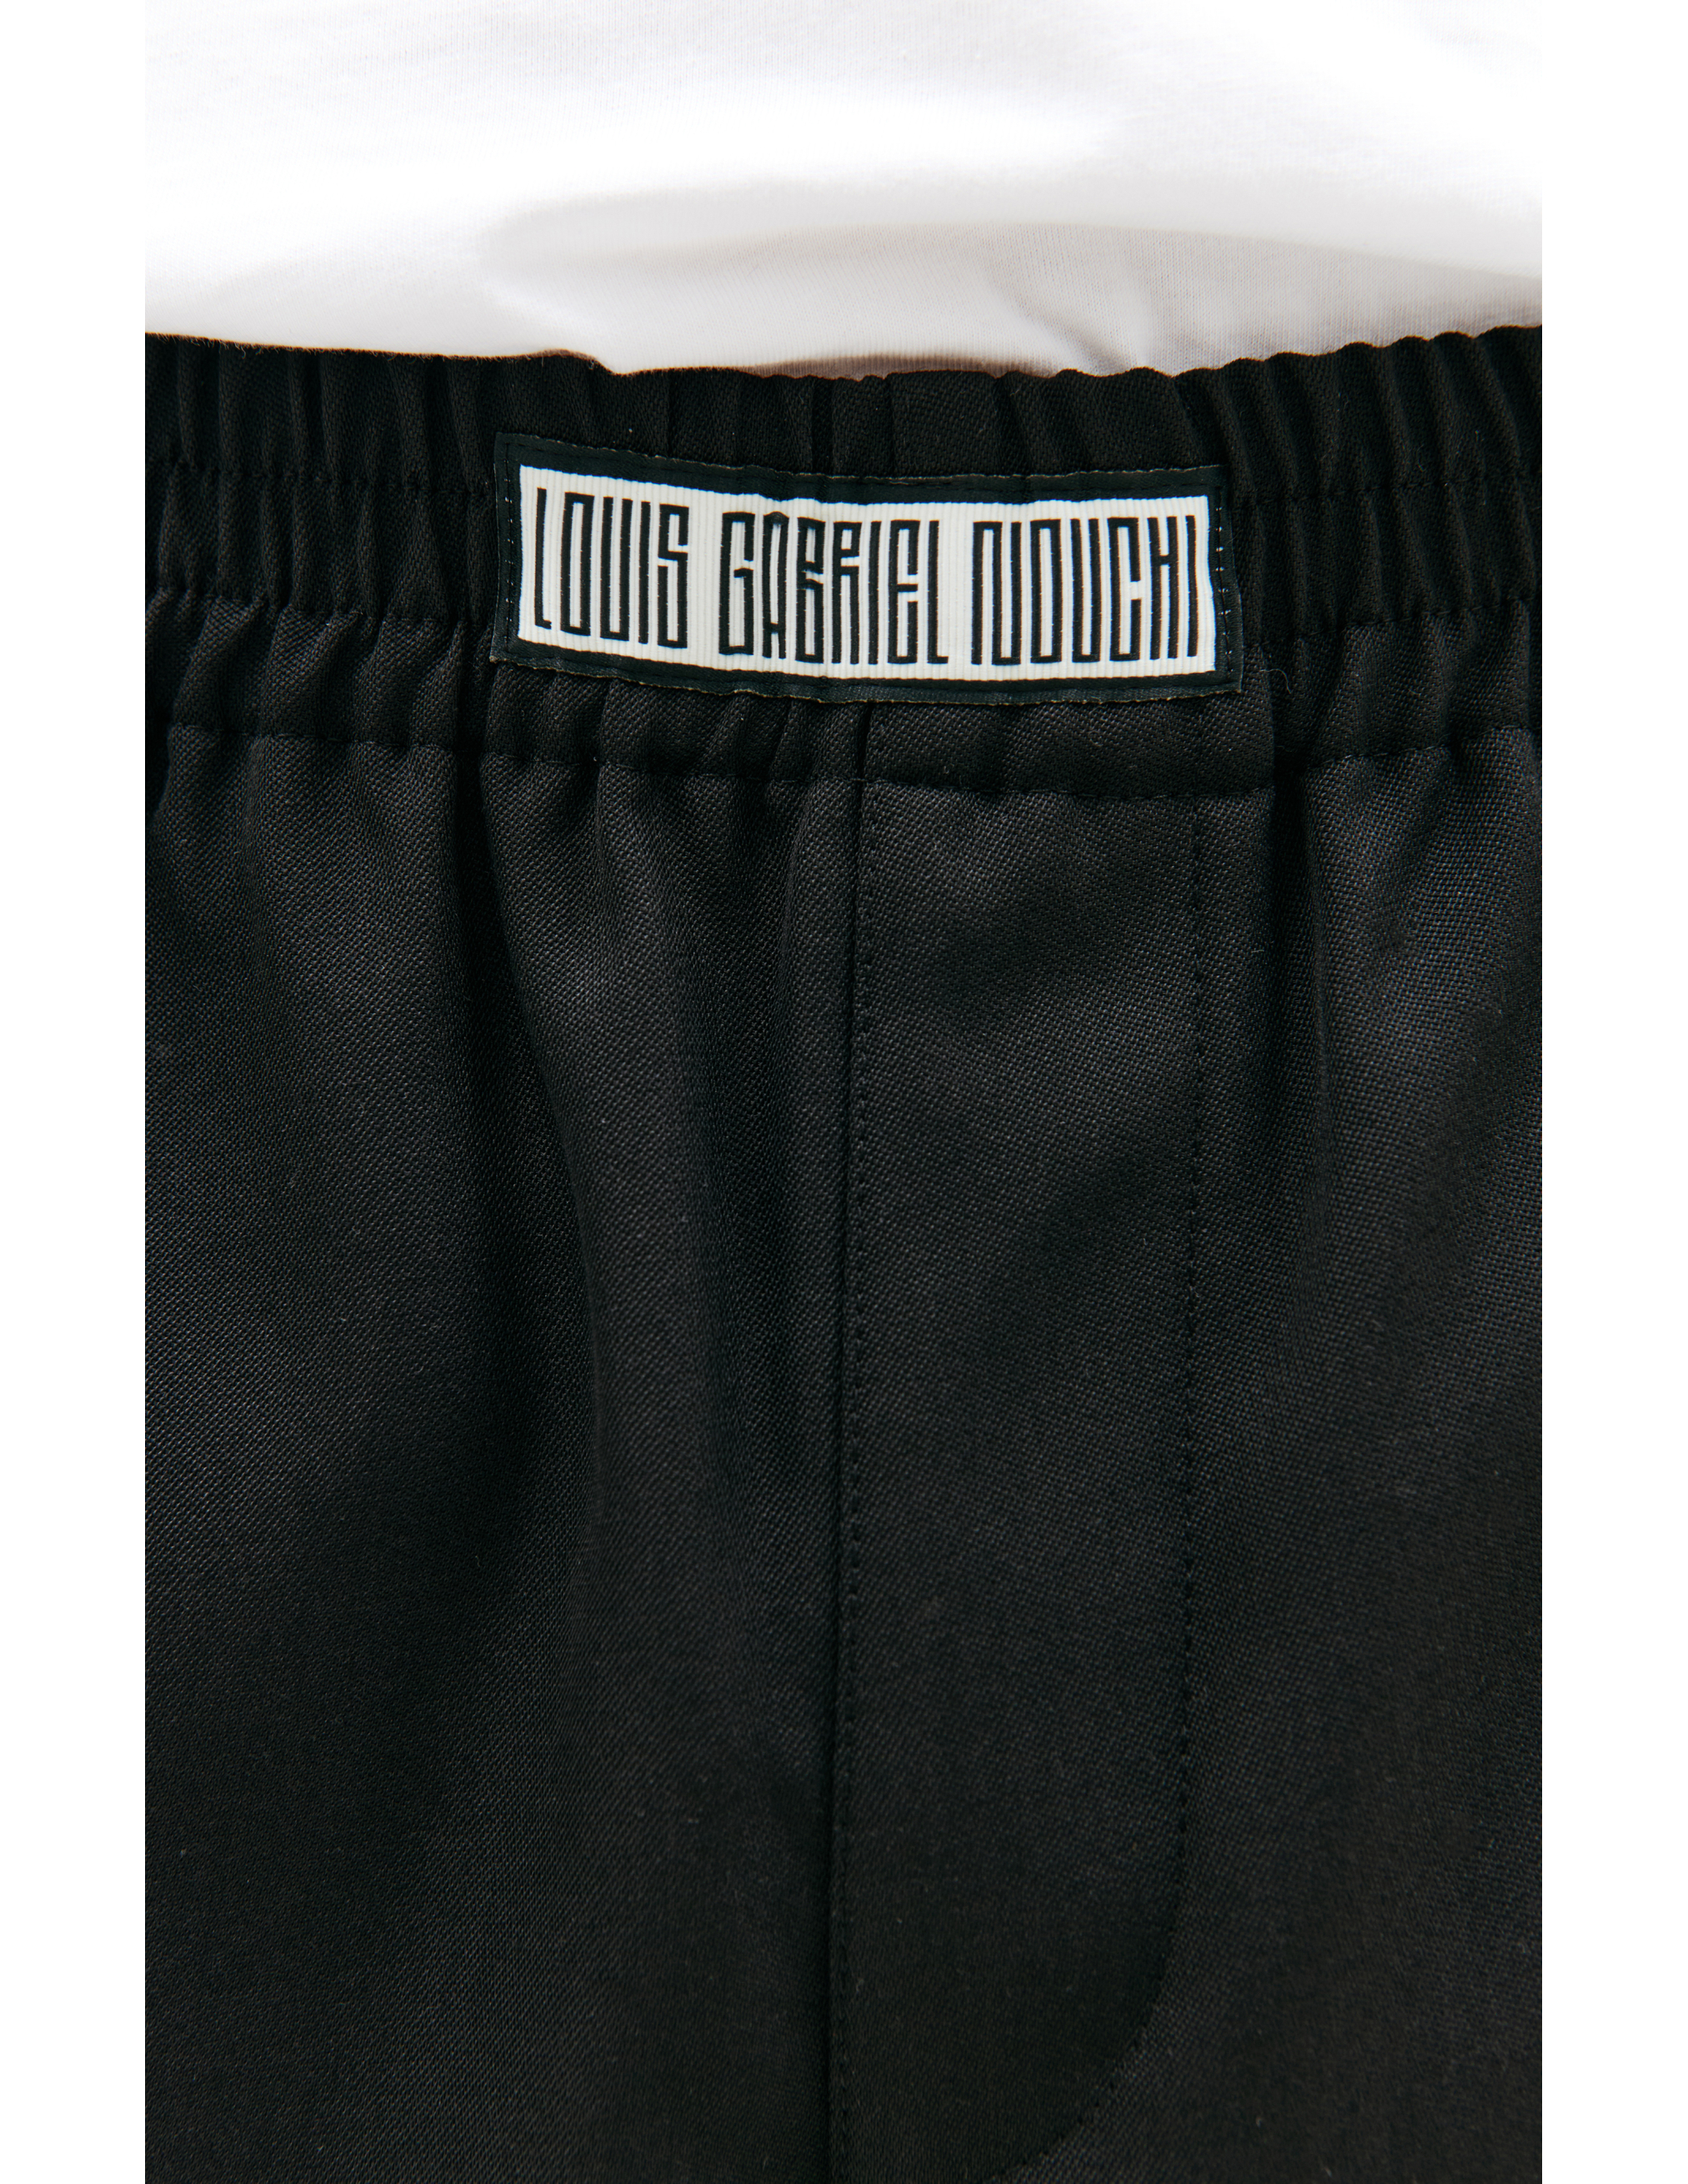 Прямые брюки со стрелками LOUIS GABRIEL NOUCHI 0711/T115/001, размер M;L;XL 0711/T115/001 - фото 4